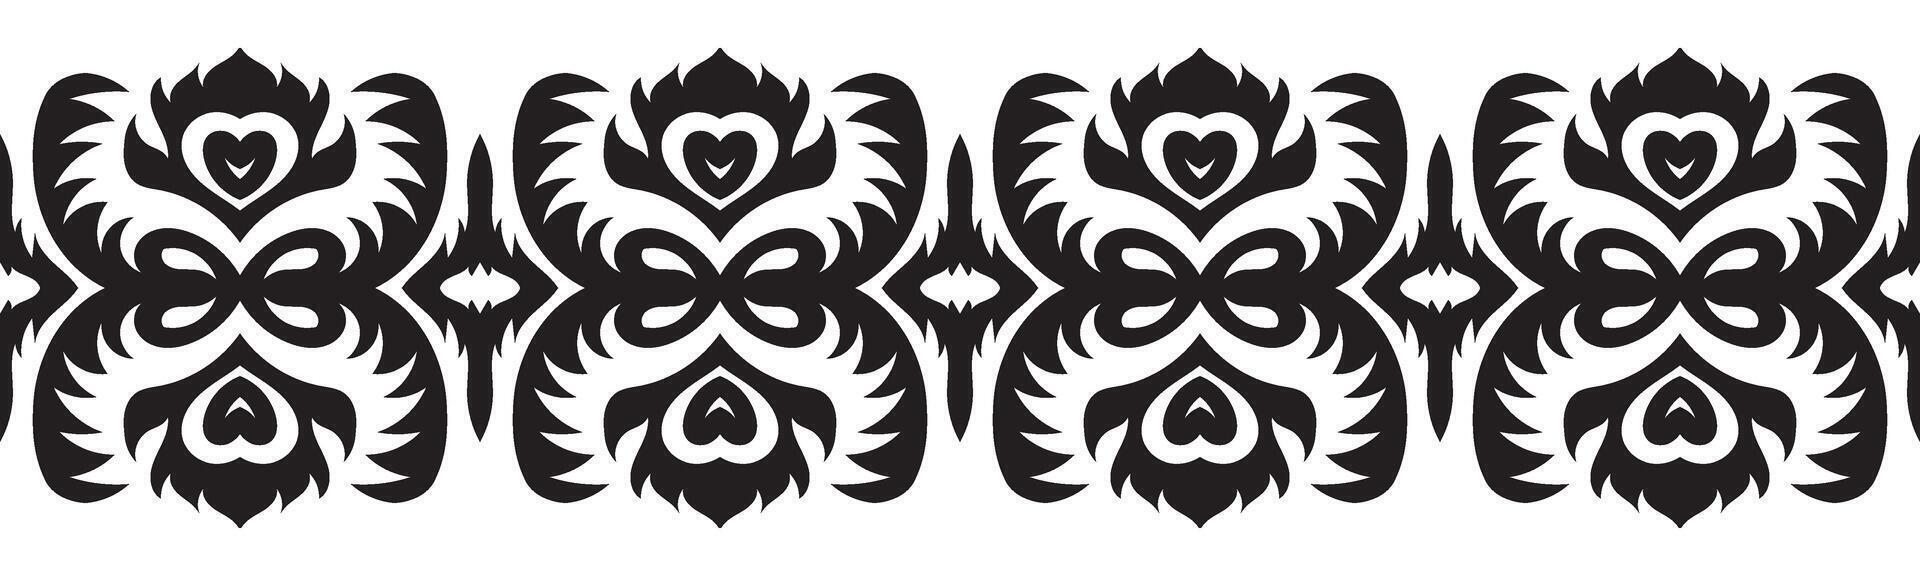 Ethnic seamless border pattern. Ornament illustration. Classic ornate element. Baroque floral vintage style. Decorative border design for frame, textile, fabric, clothing, carpet, curtain, rug. vector